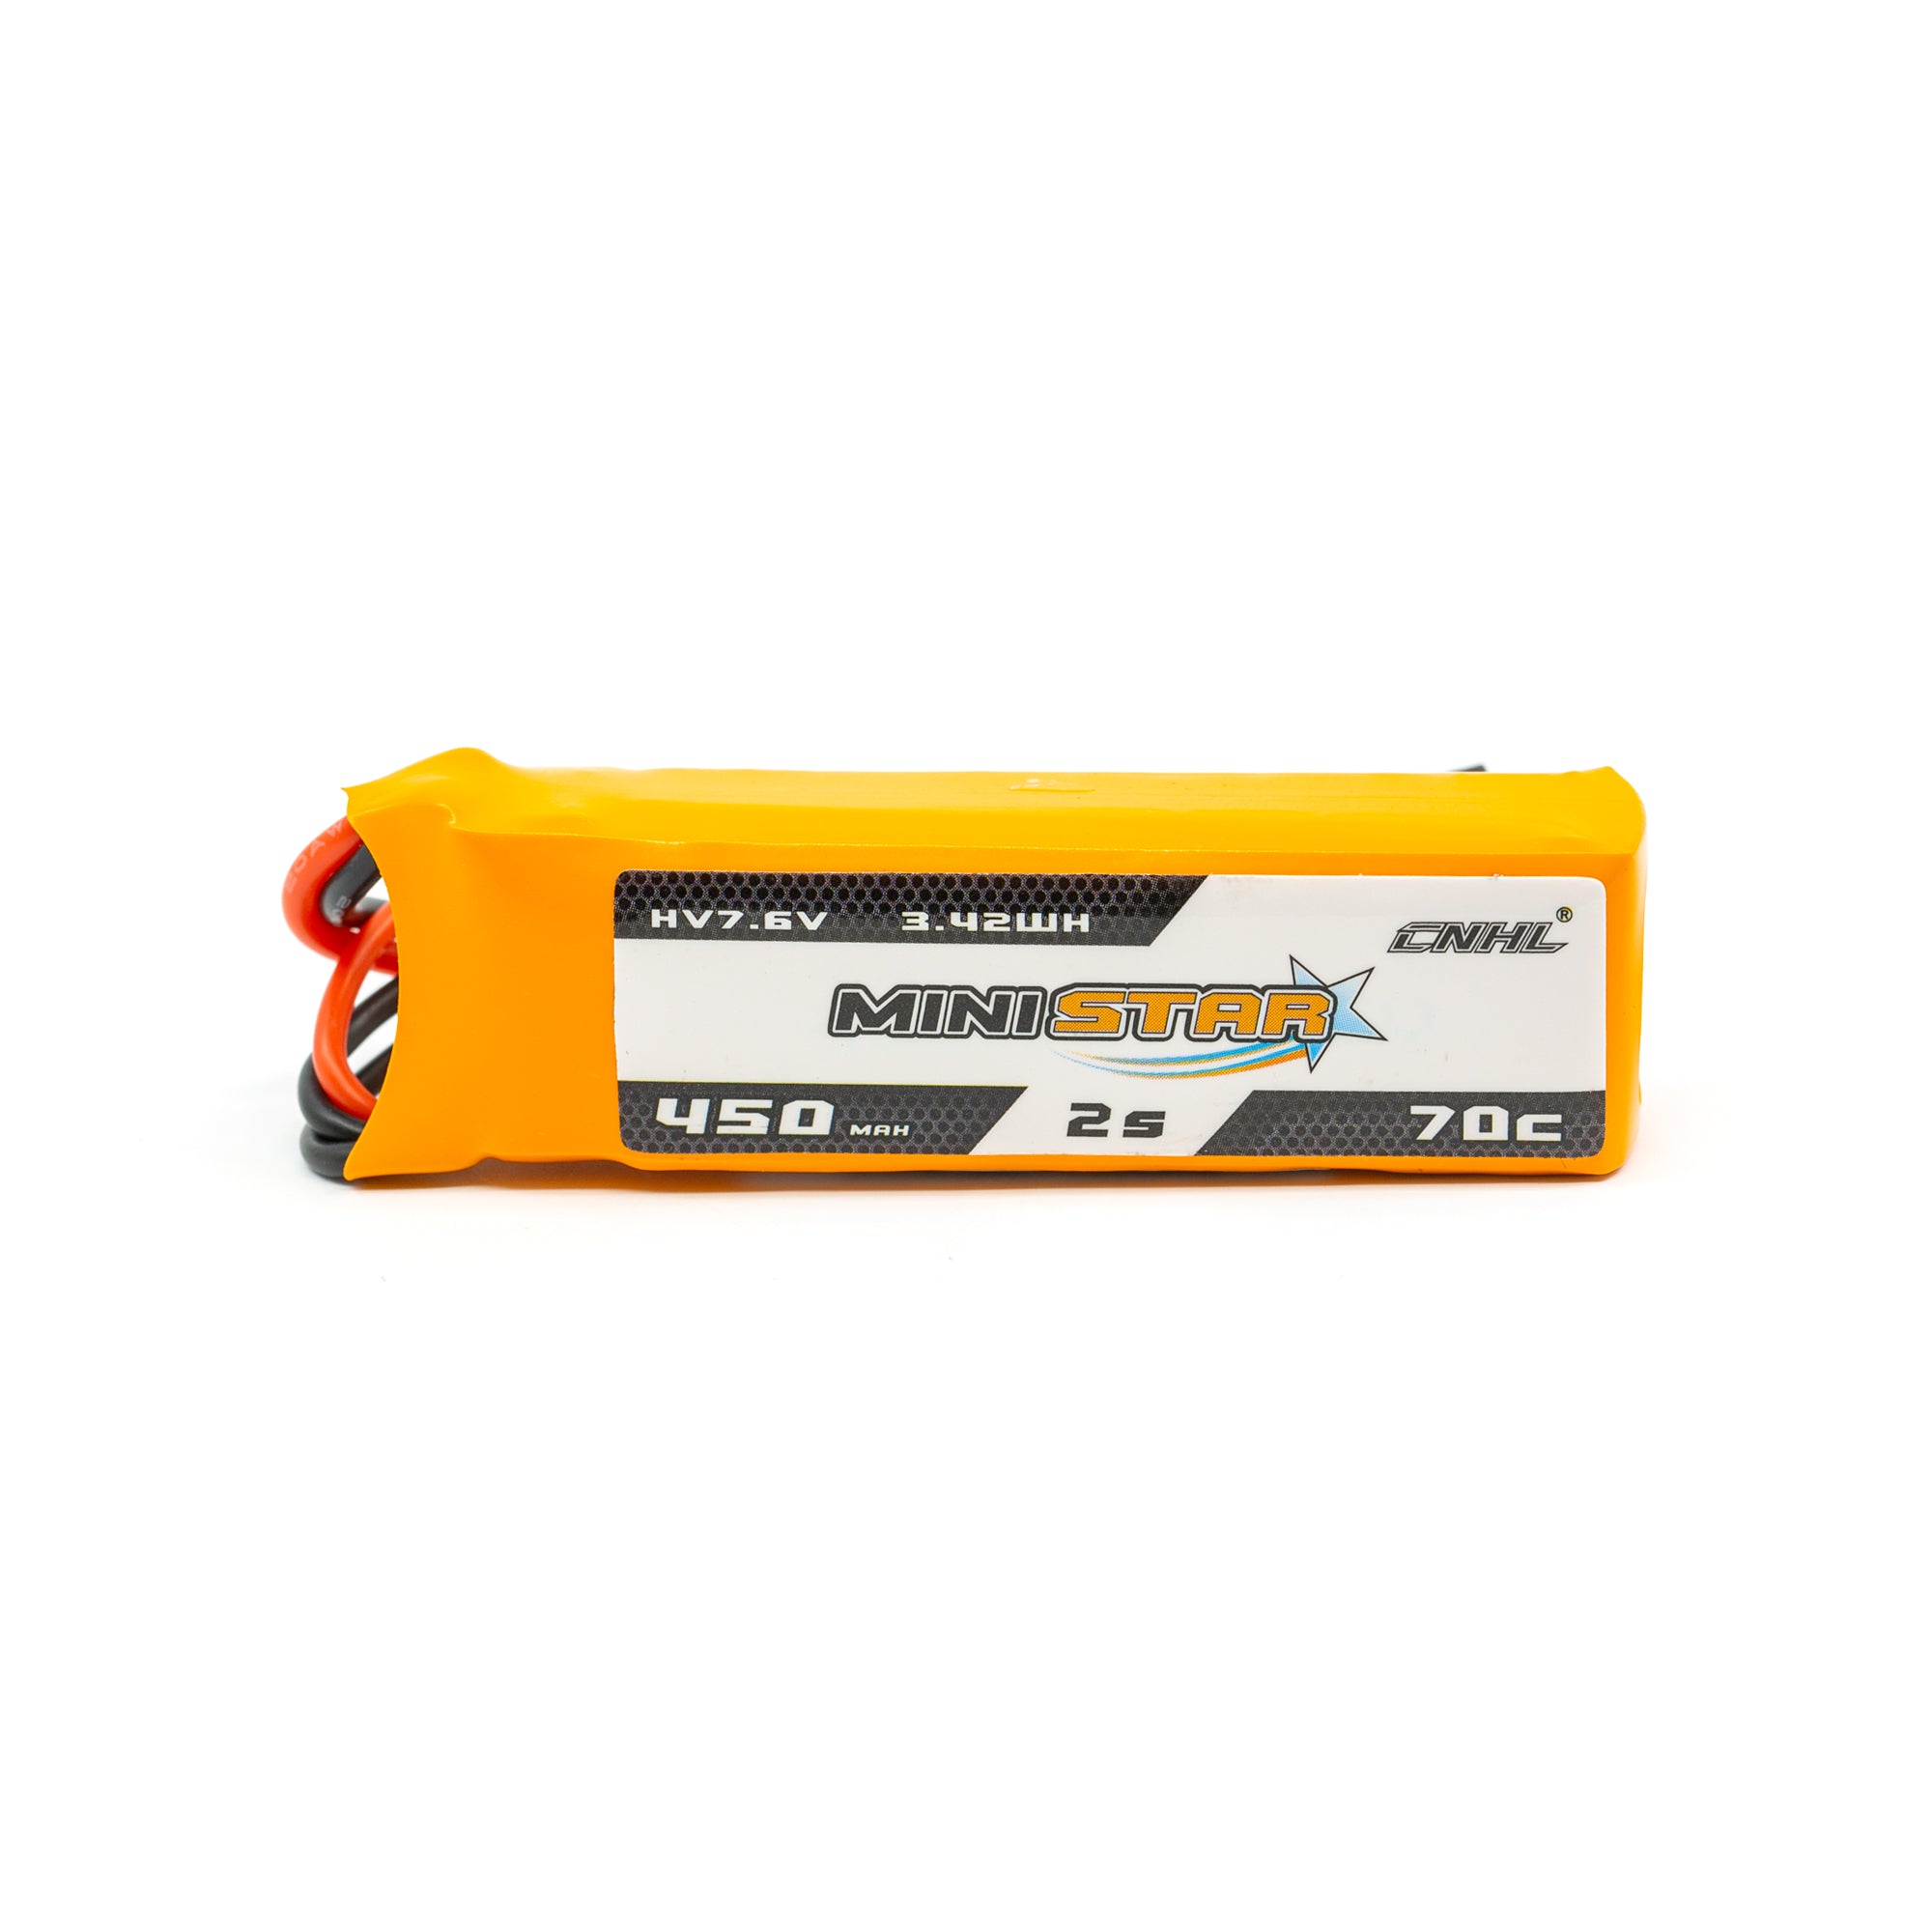 Chinahobbyline CNHL Ministar 450mAh 2s 70c Lipo Battery (3 PACK) [DG]